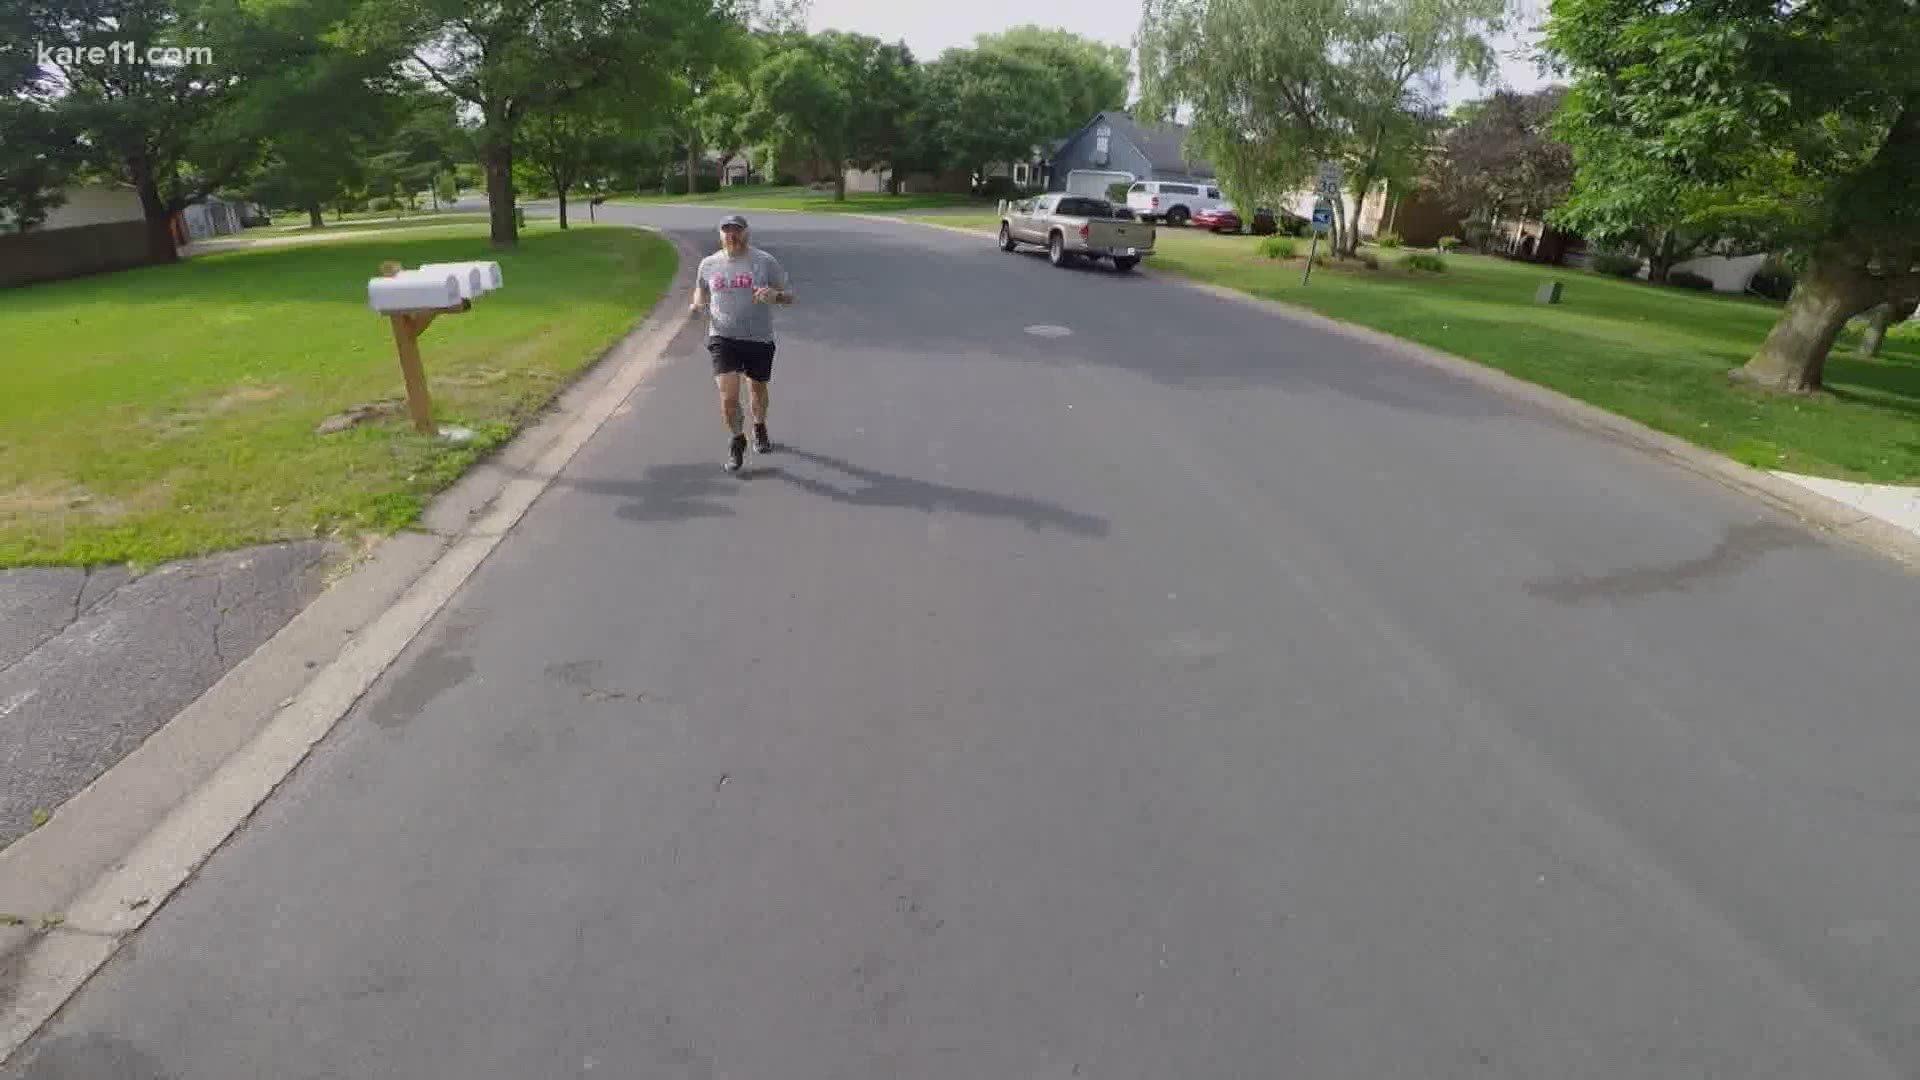 With Grandma's Marathon canceled, Jason DeShaw ran his own race by doing 39 laps around his neighborhood.